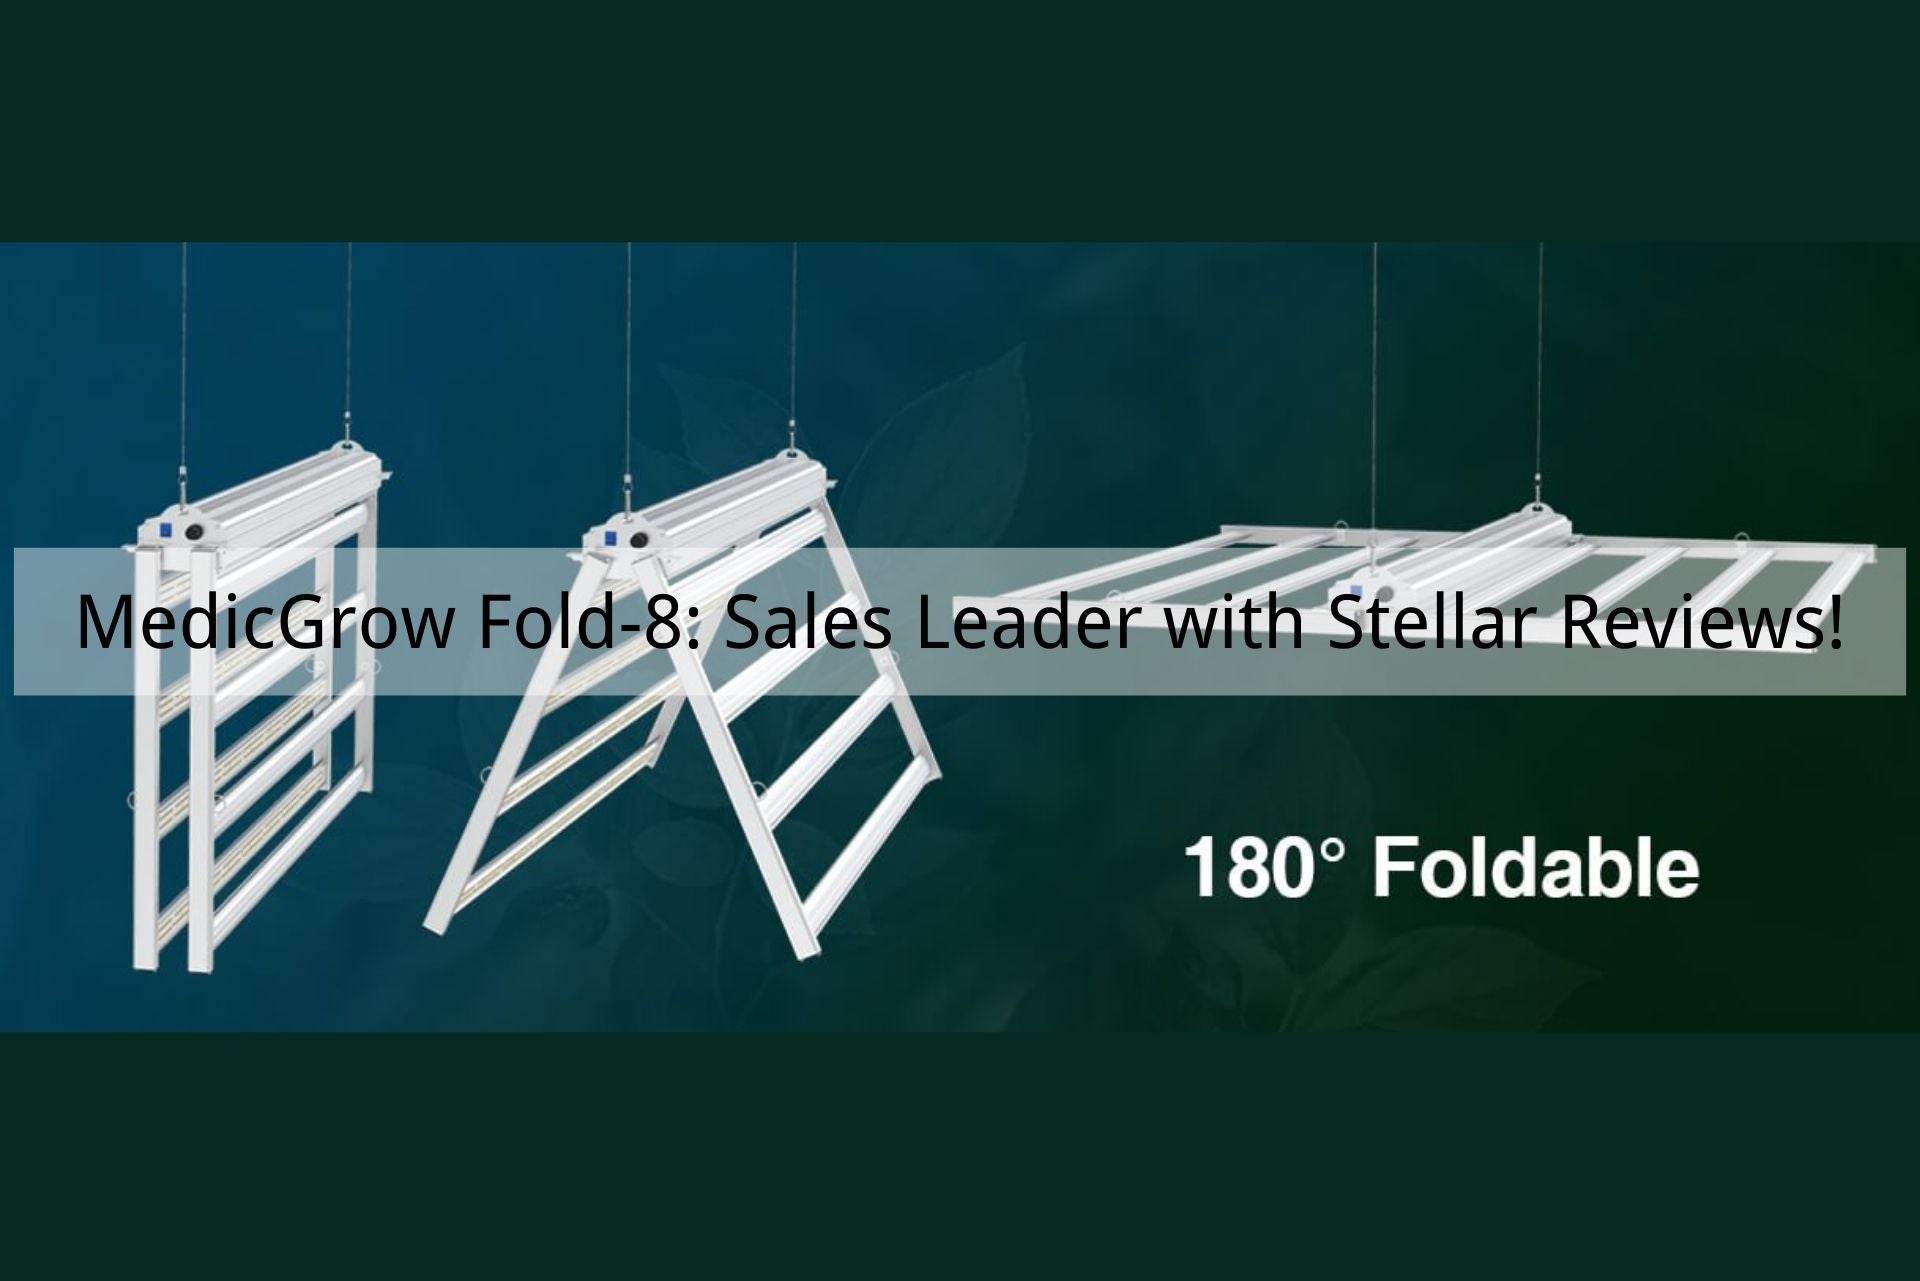 MedicGrow Fold-8: Sales Leader with Stellar Reviews!